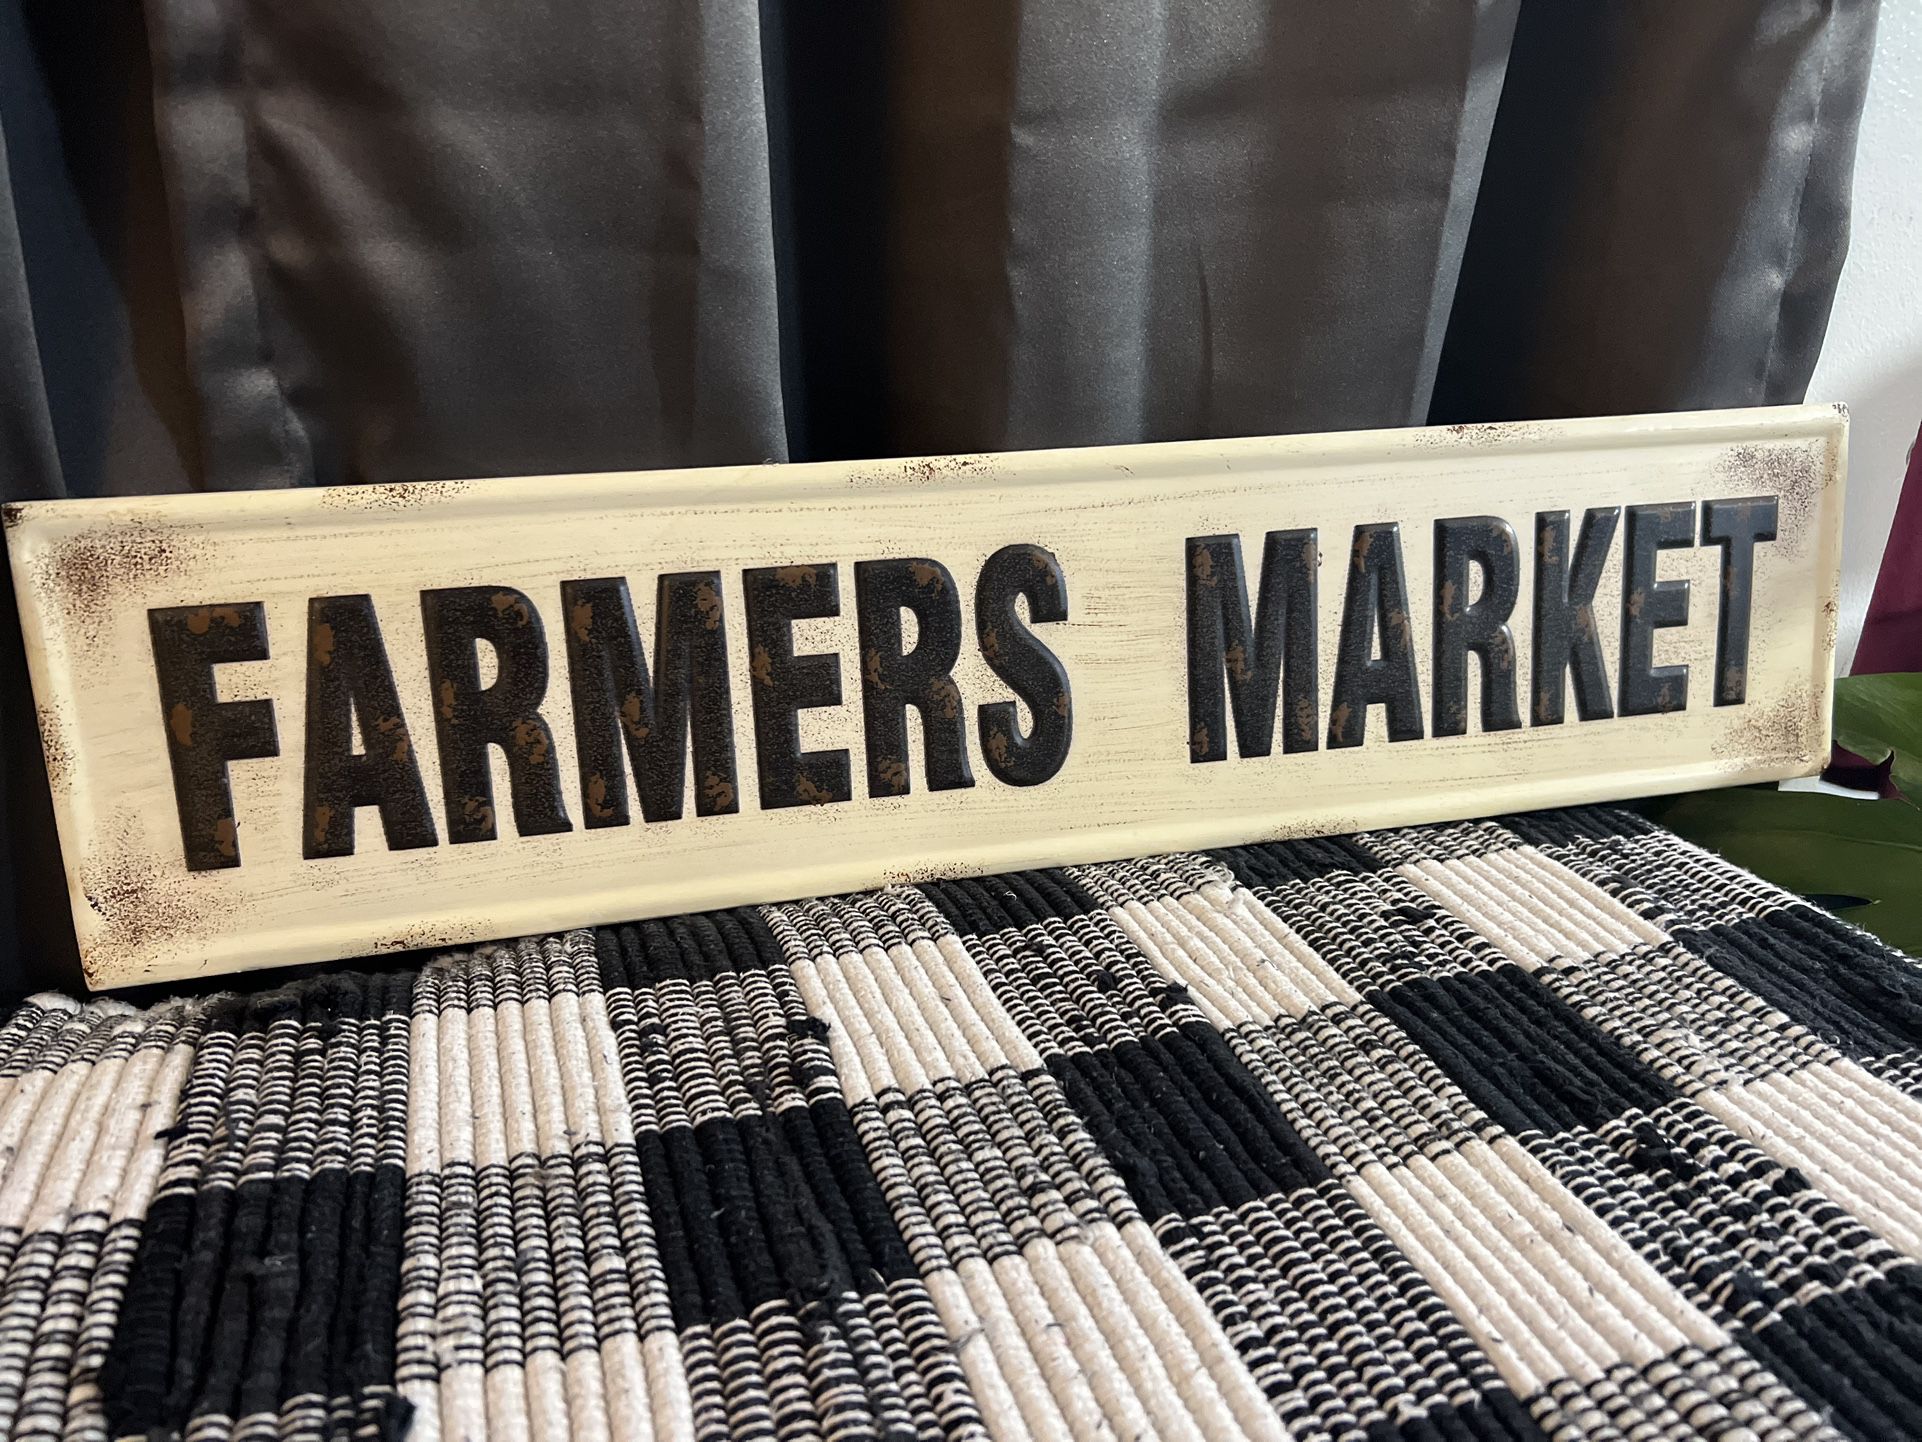 Farmers Market Metal Sign